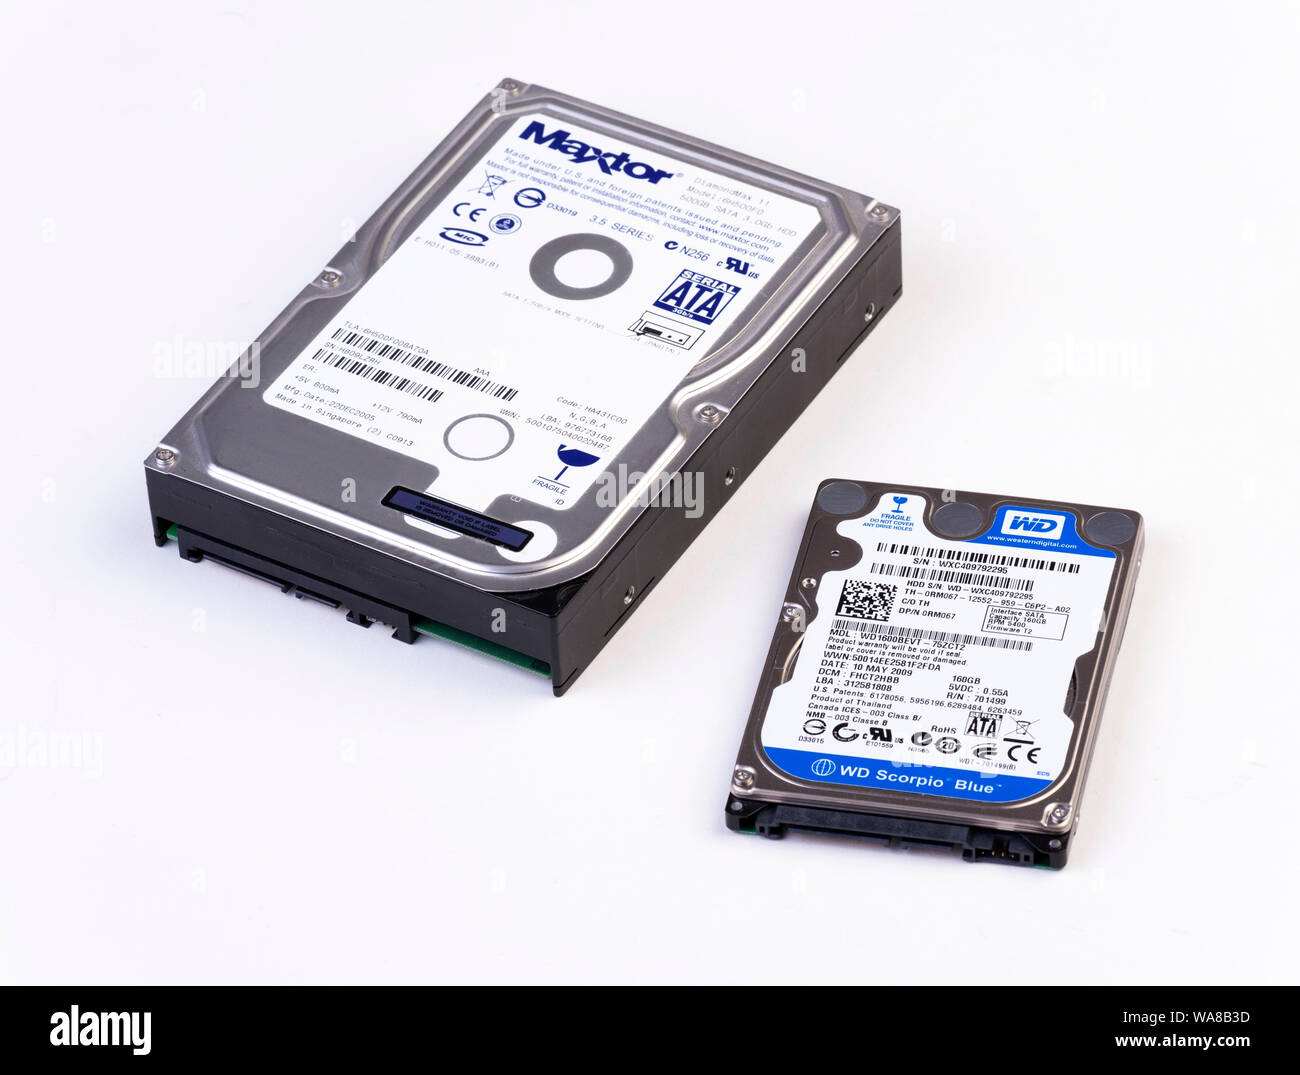 3.5' and 2.5' computer hard drives Stock Photo